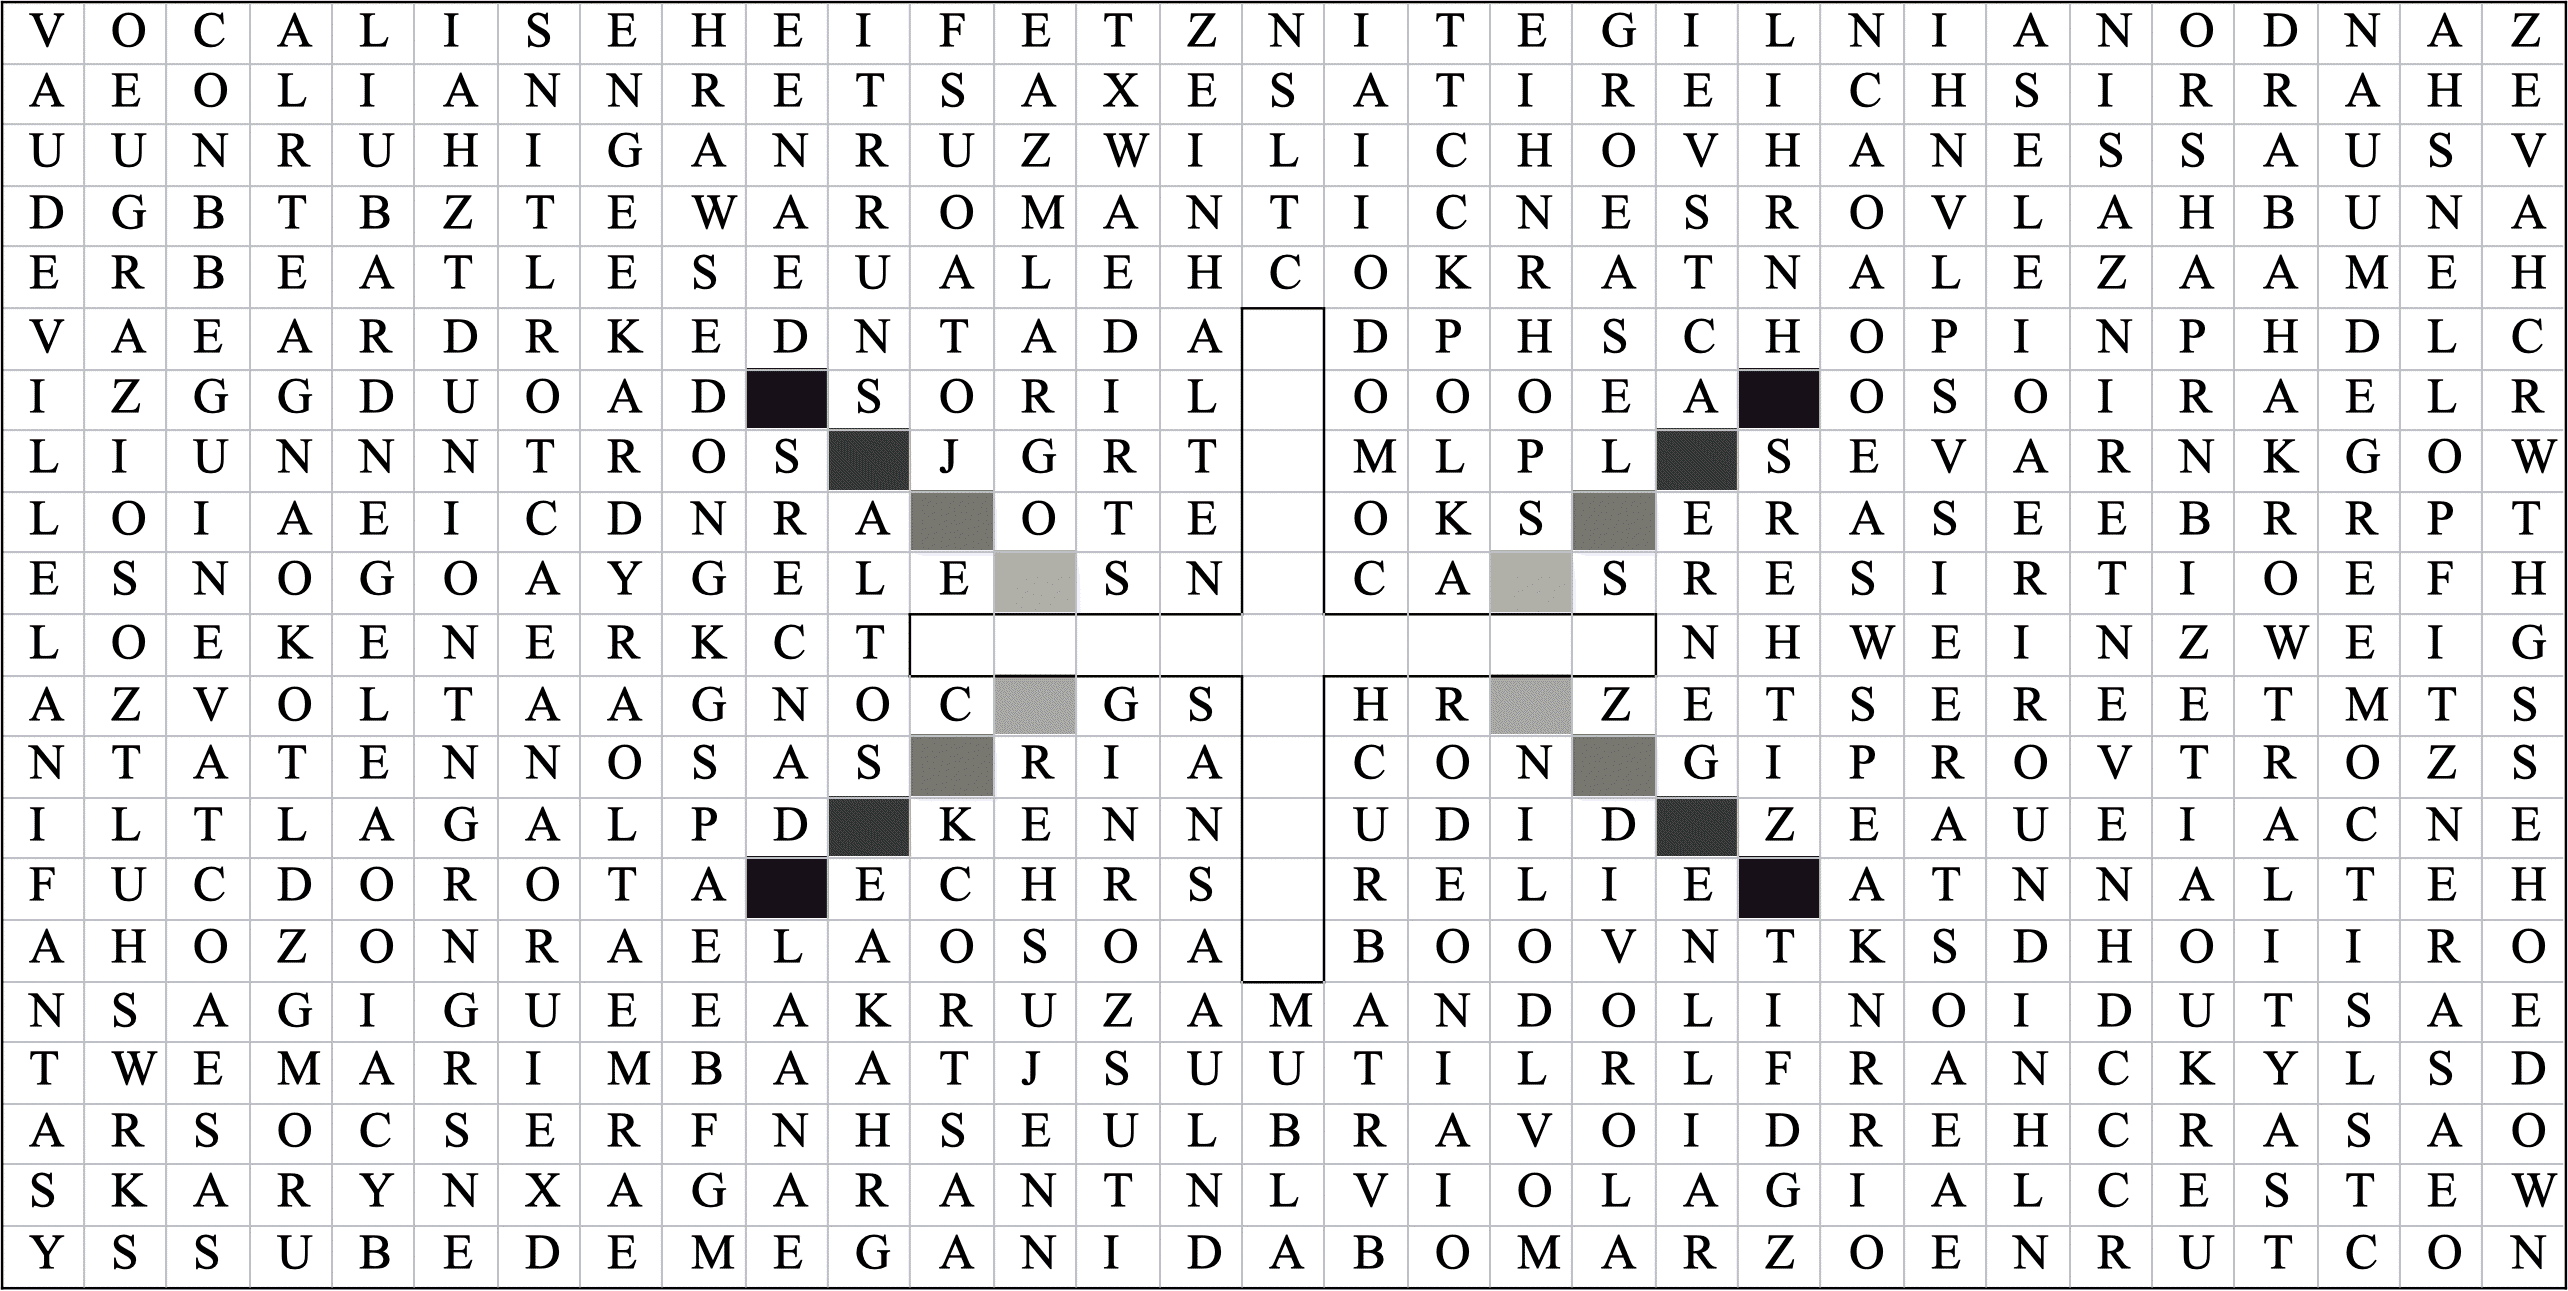 'Zwilich' find-a-word puzzle, © Allan Rae